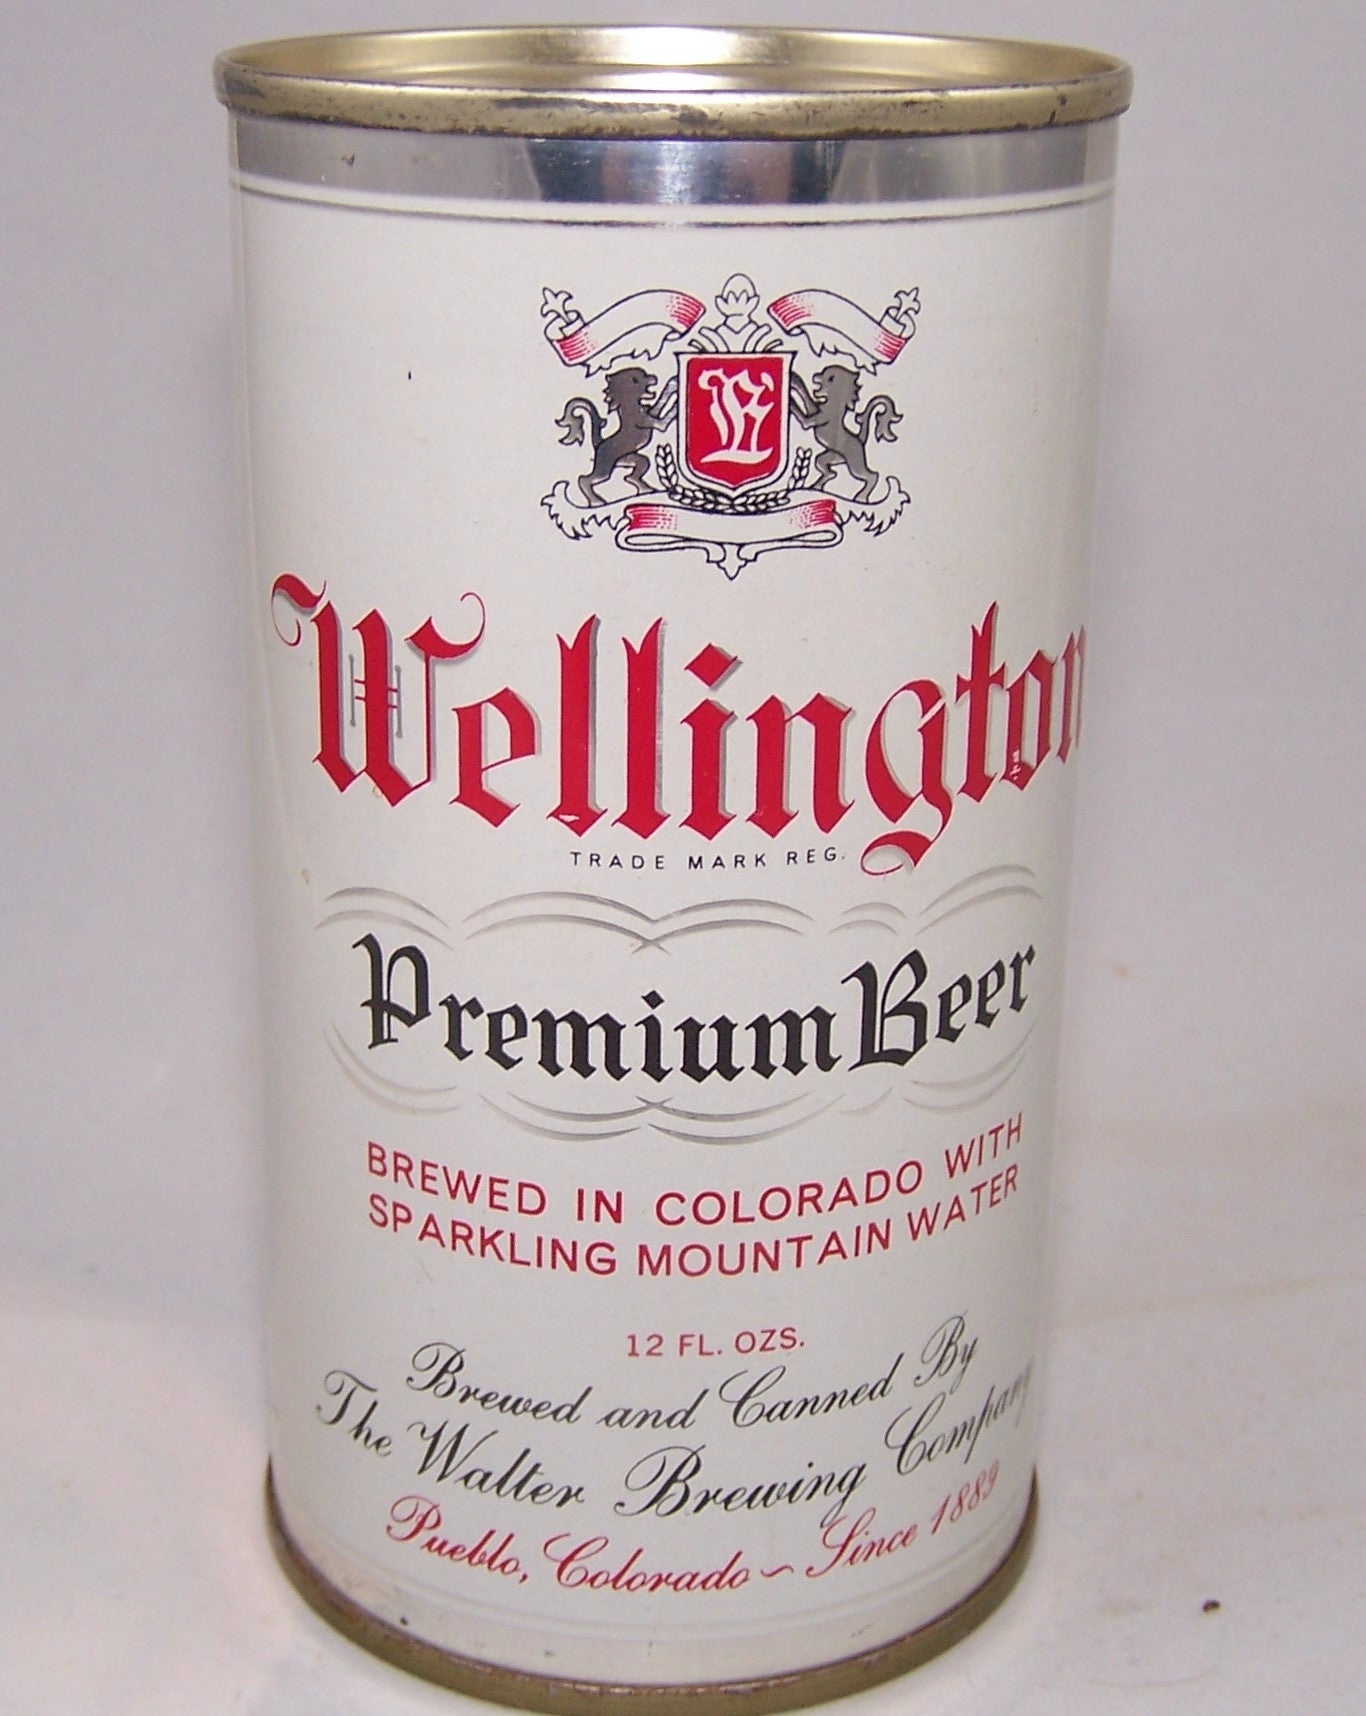 Wellington Premium Beer (Silver Trim) USBC 145-1, Grade 1/1+ Sold 10/9/19